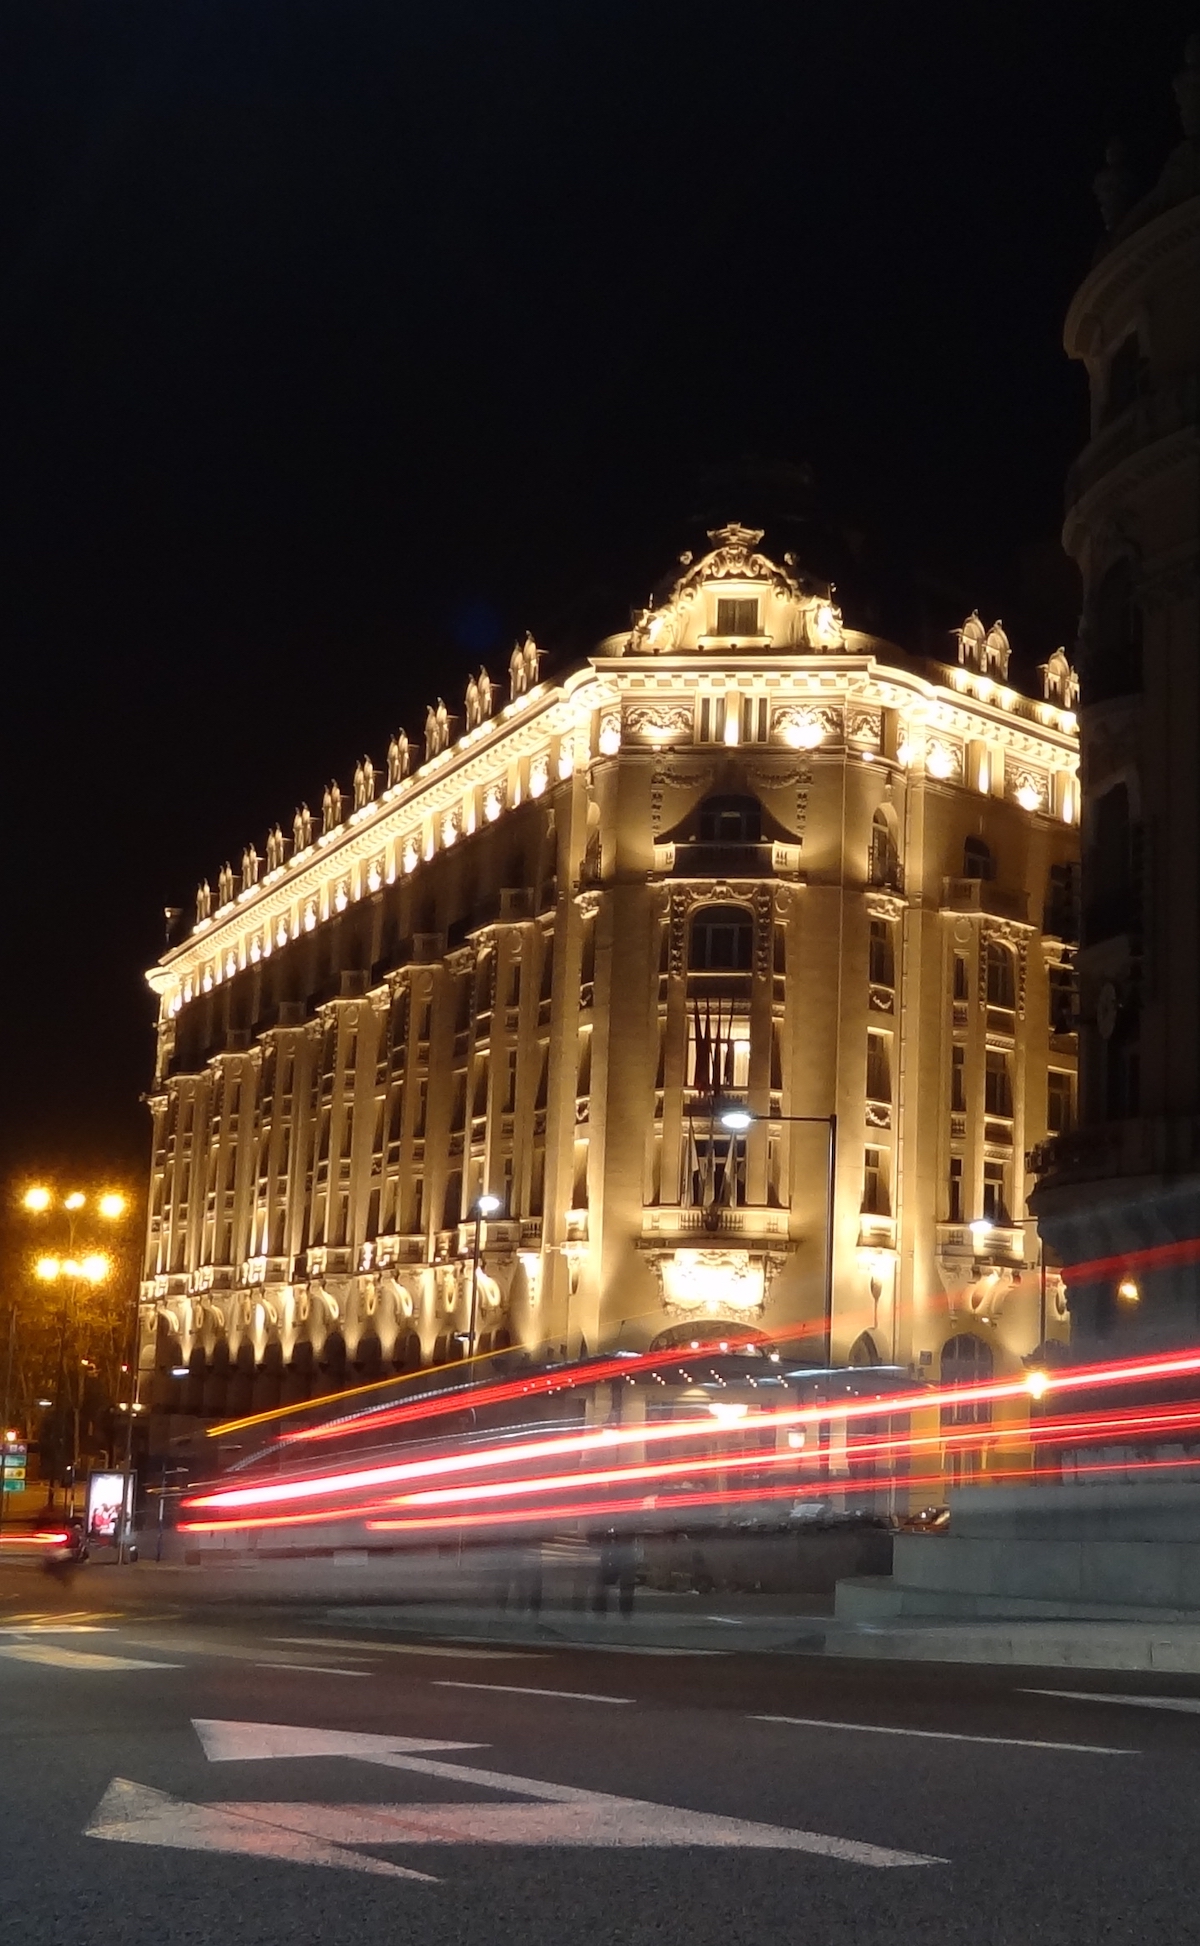 Exterior of the Westin Palace Hotel in Madrid illuminated at night.